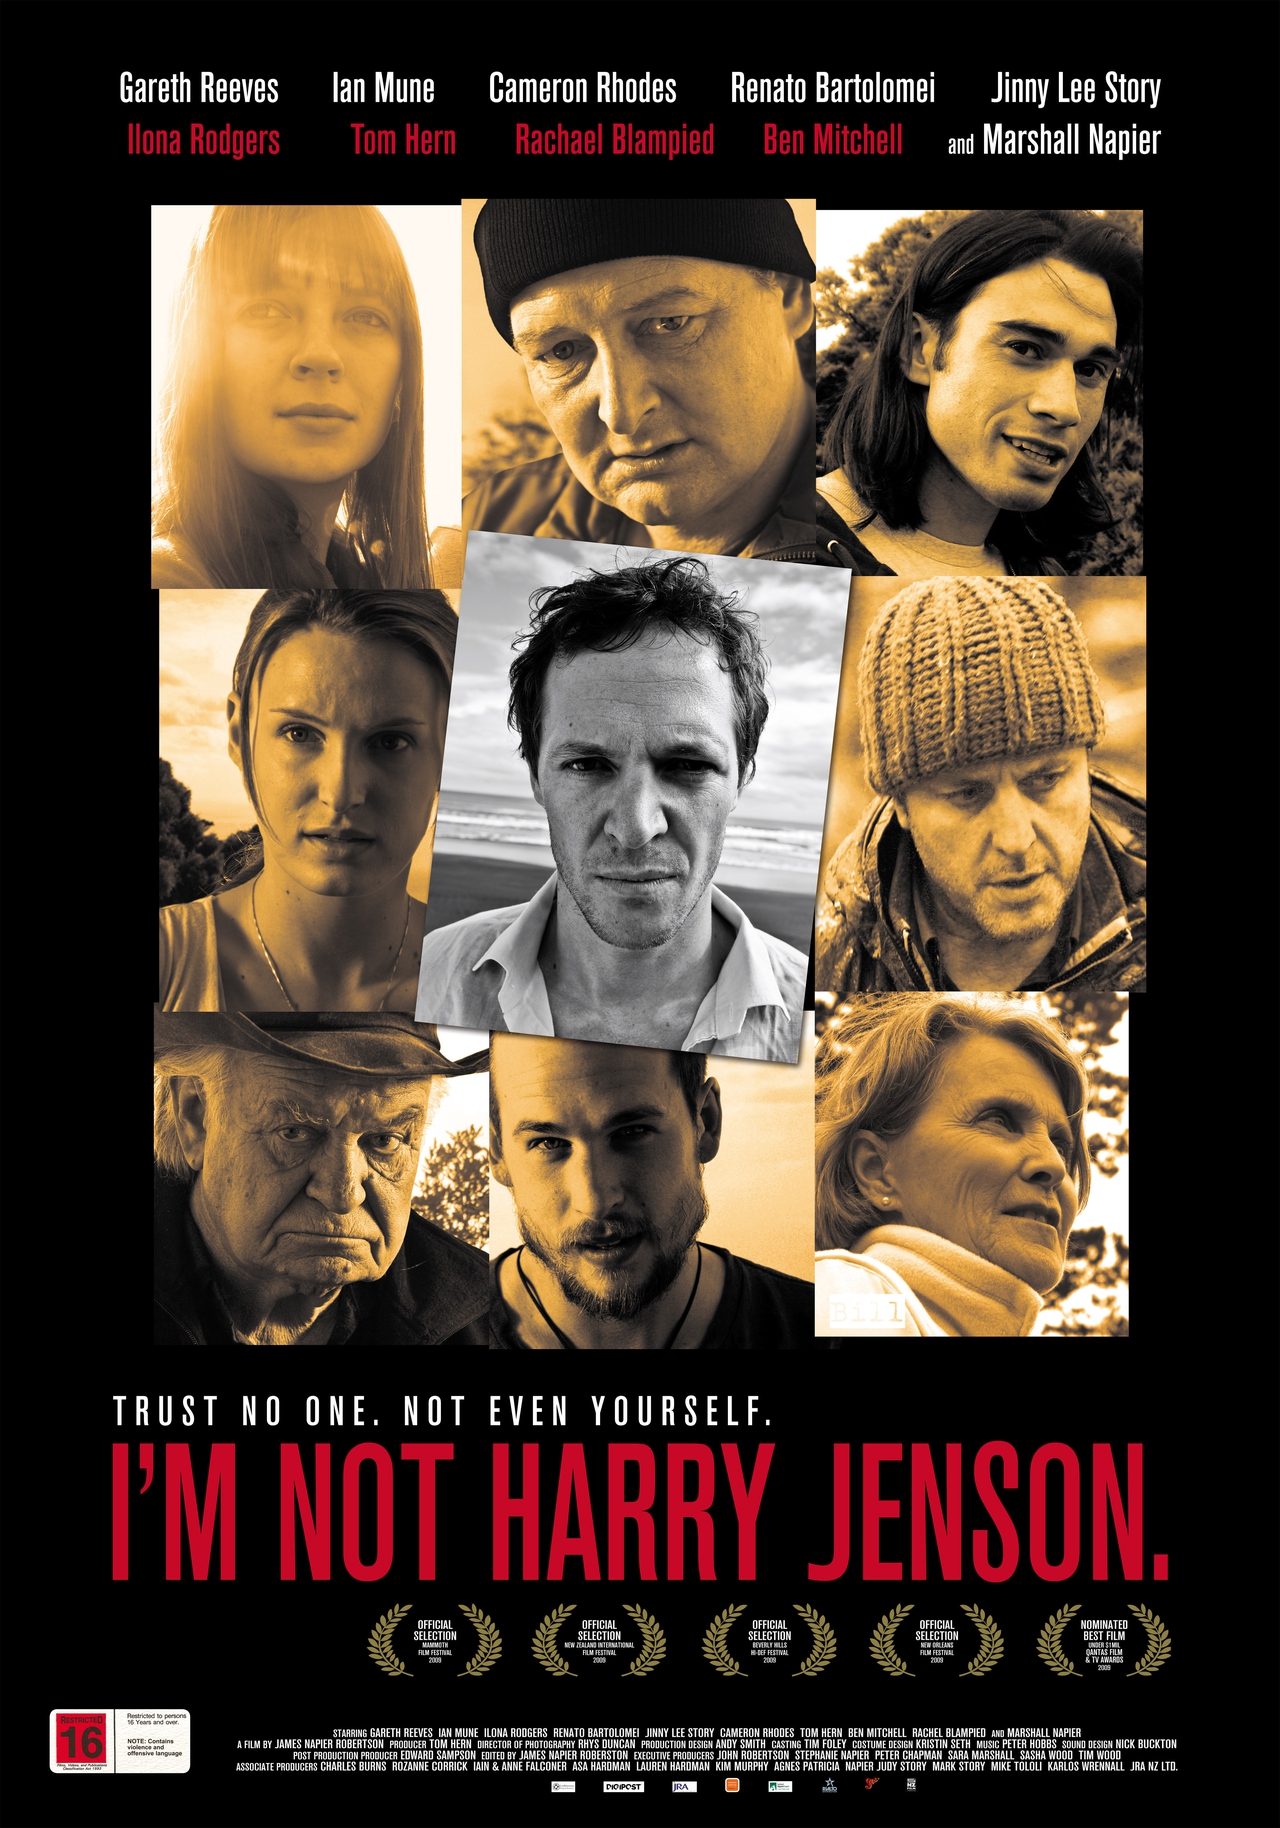 Cameron Rhodes در صحنه فیلم سینمایی I'm Not Harry Jenson. به همراه Tom Hern، Gareth Reeves، Ian Mune، Jinny Lee Story، Renato Bartolomei و Michelle Langstone